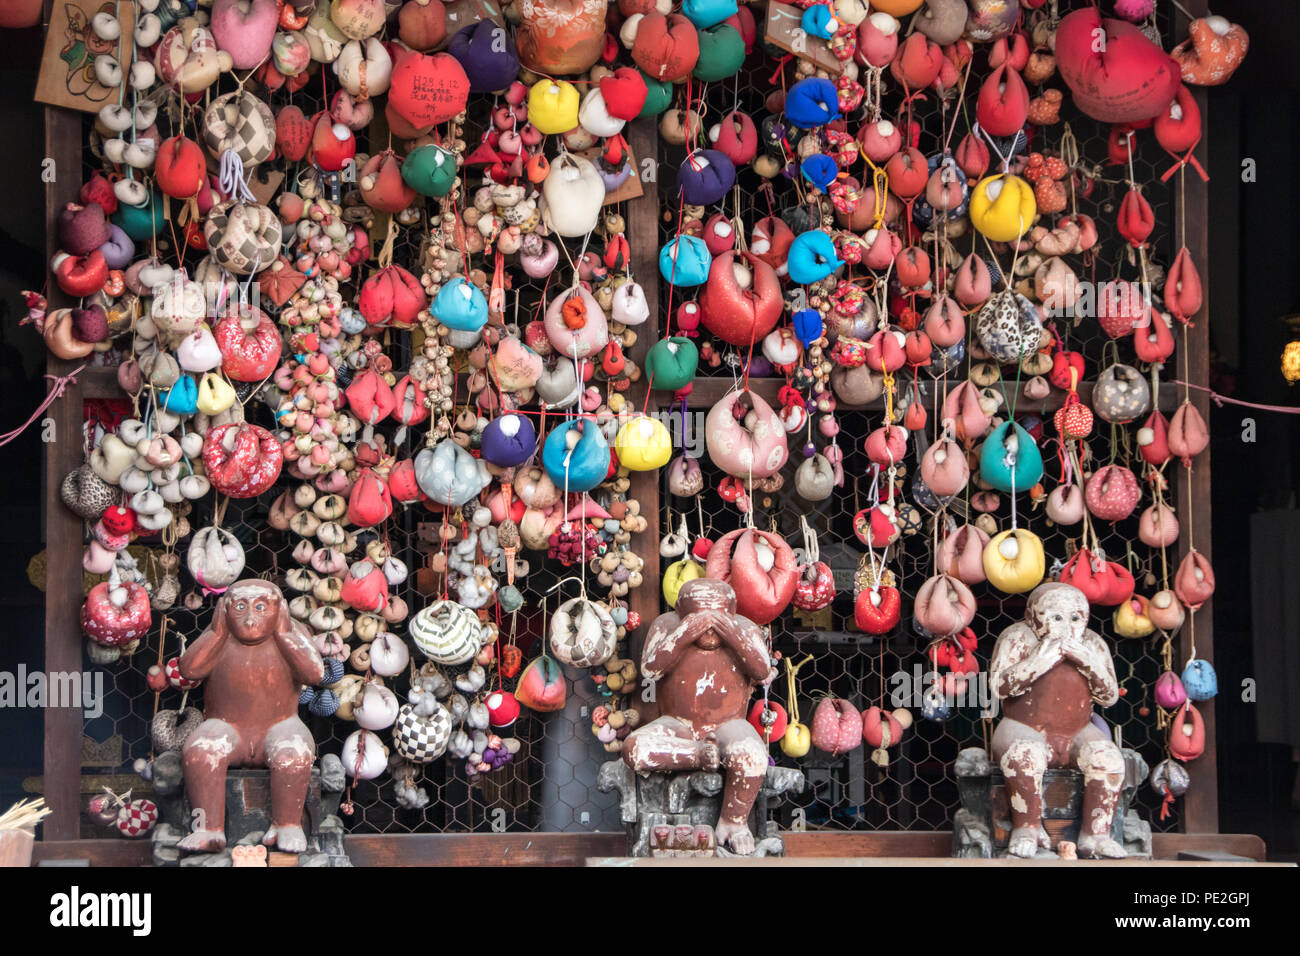 Offerte di colorati per le tre scimmie sagge di Yasaka Kōshin-dō in Higashiyama, Kyoto, Giappone. Foto Stock